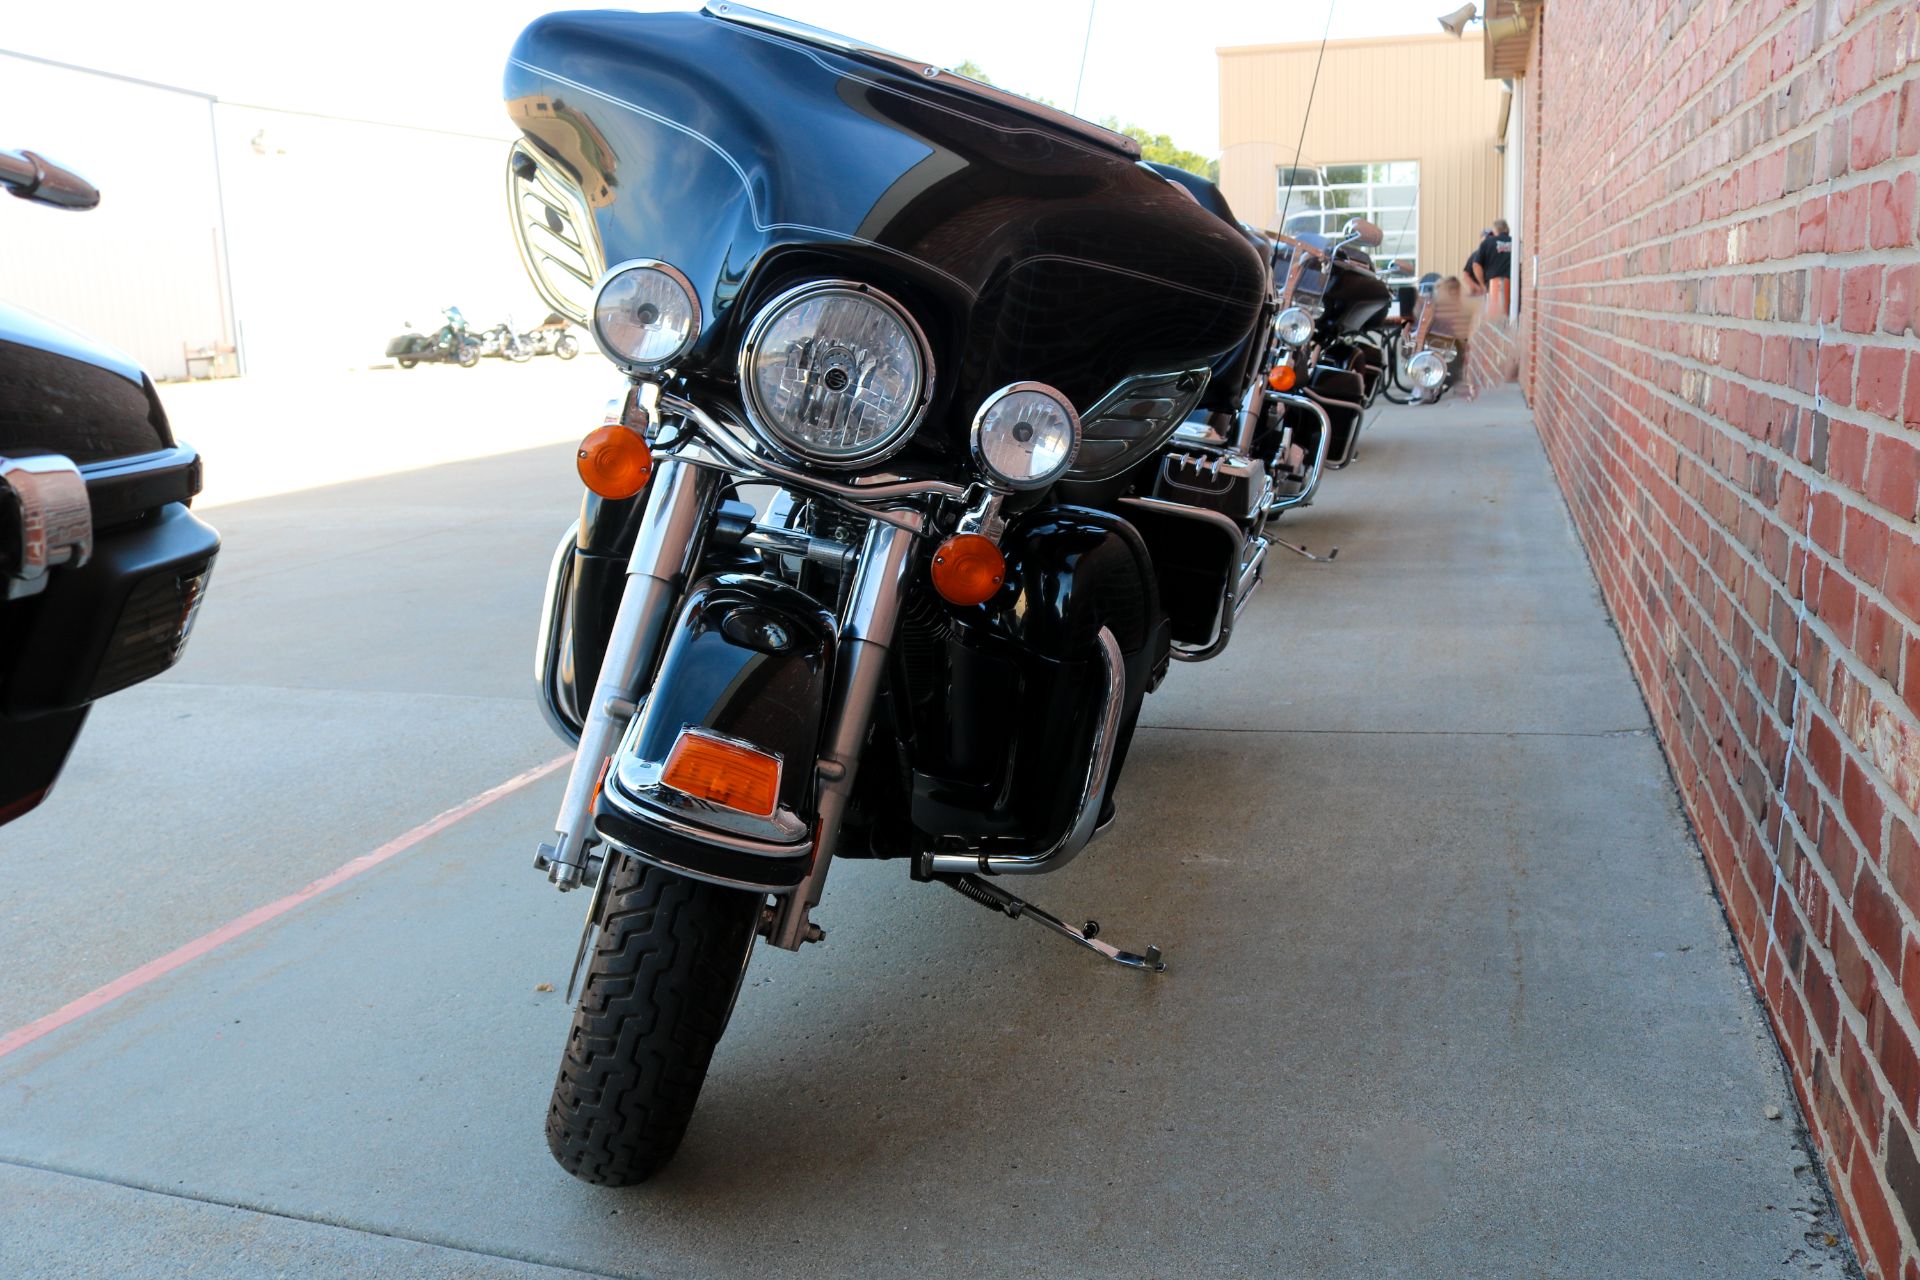 2007 Harley-Davidson Ultra Classic® Electra Glide® in Ames, Iowa - Photo 6